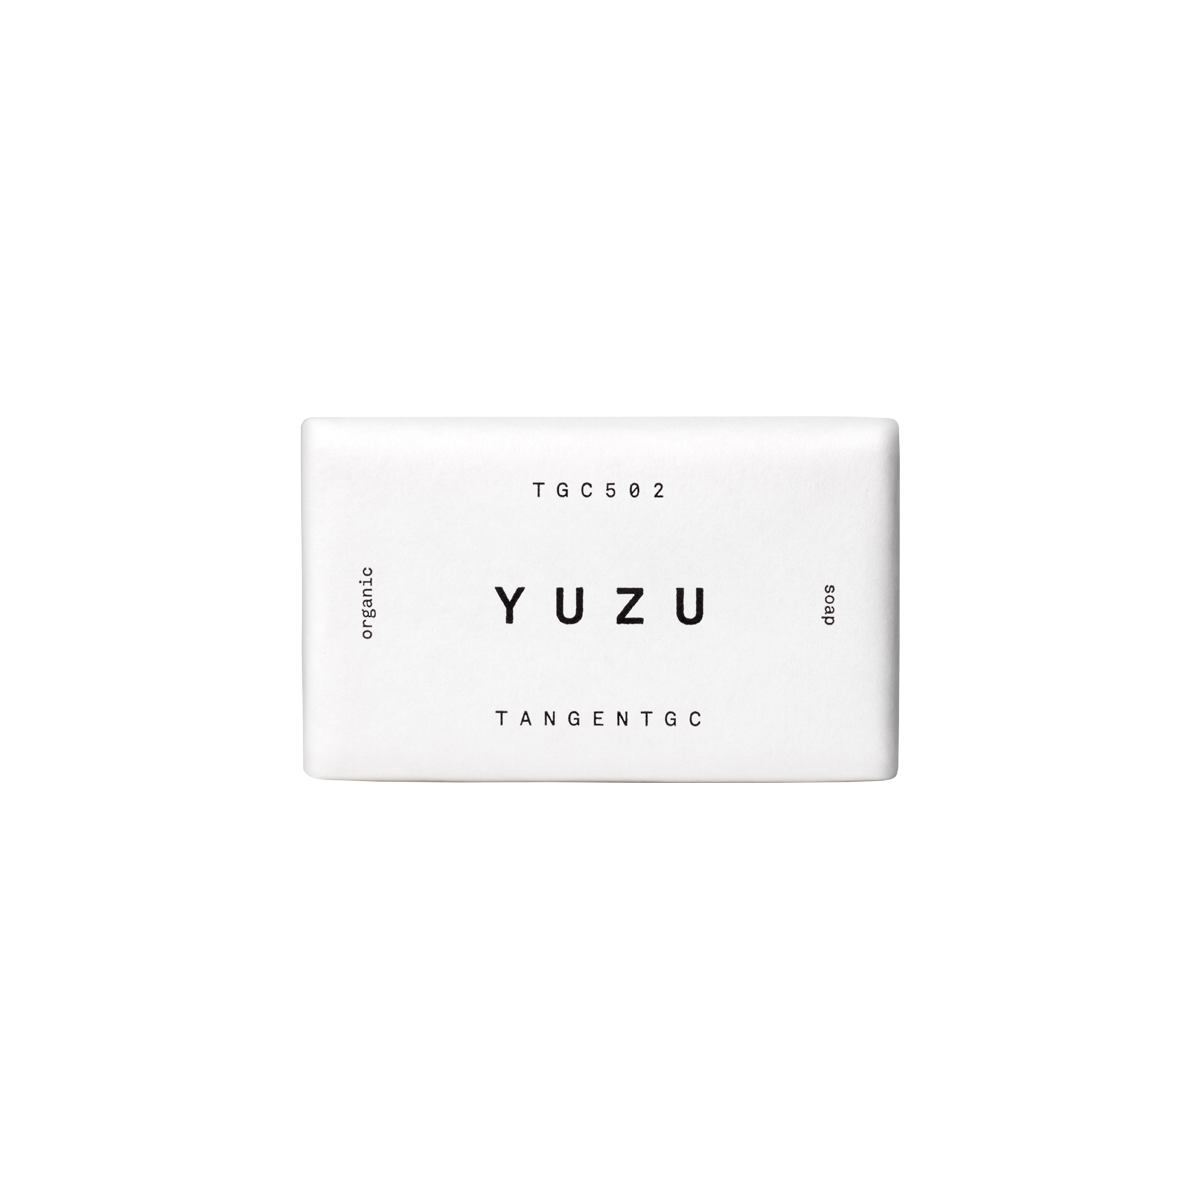 Tangent GC - Yuzu Soap Bar